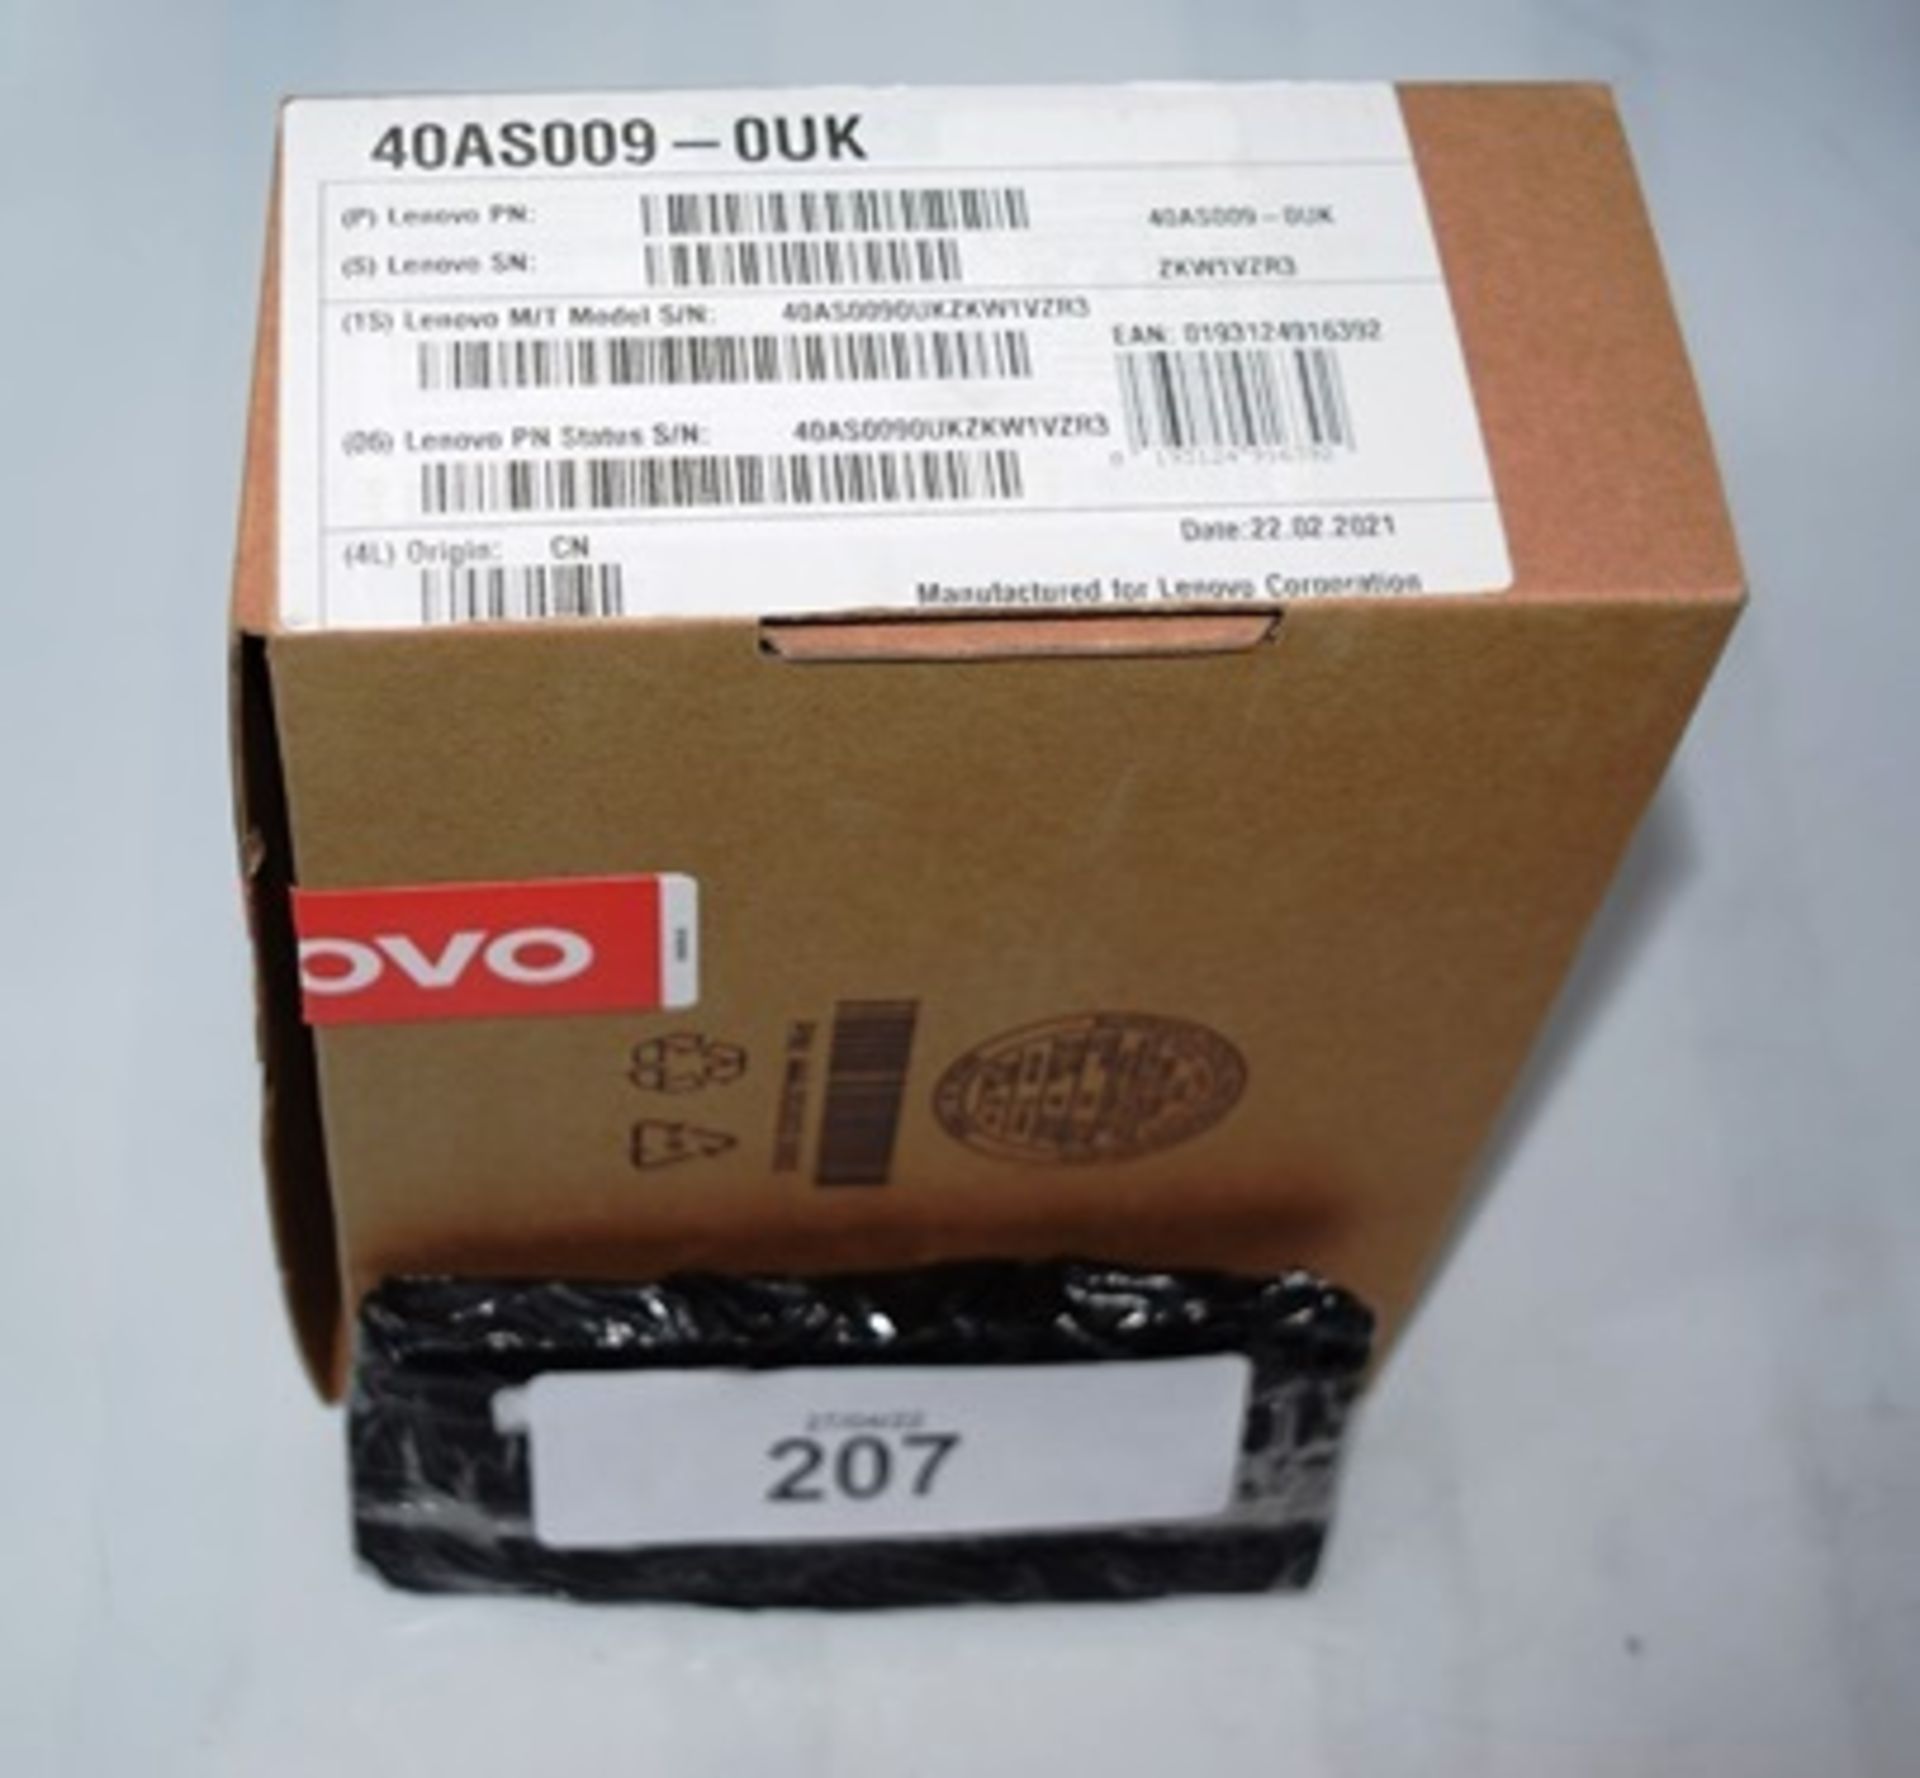 1 x Lenovo ThinkPad USB C Dock Gen 2 docking unit, P.N. 40AS009-OUK - New in box (FST2)